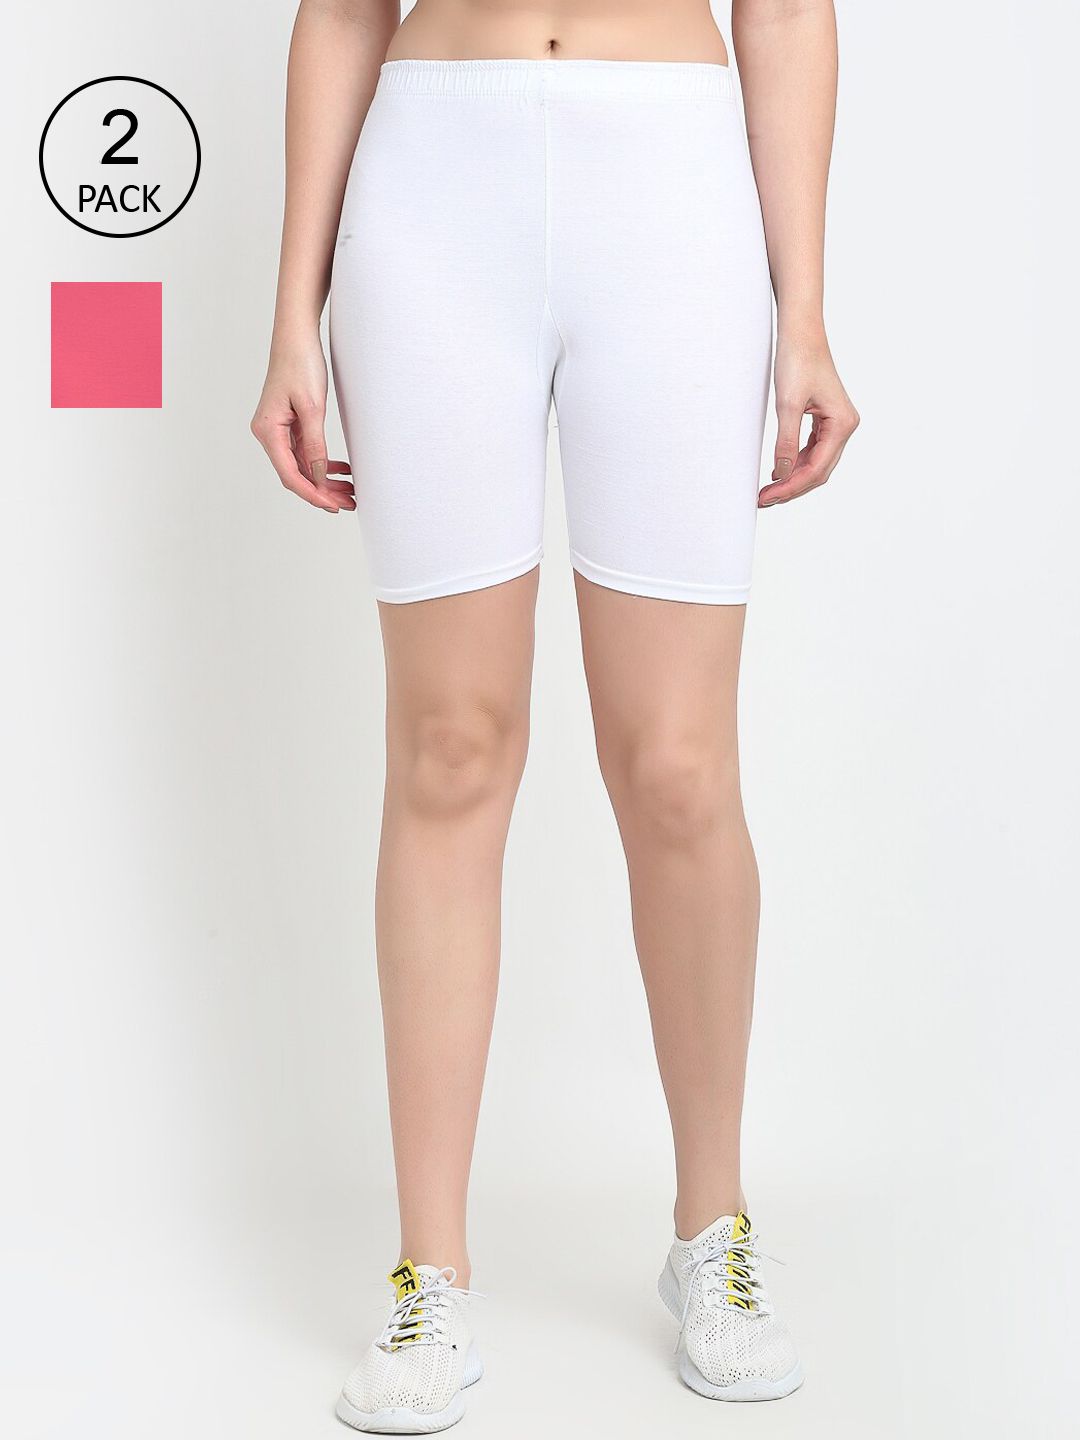 GRACIT Women White Biker Shorts Price in India